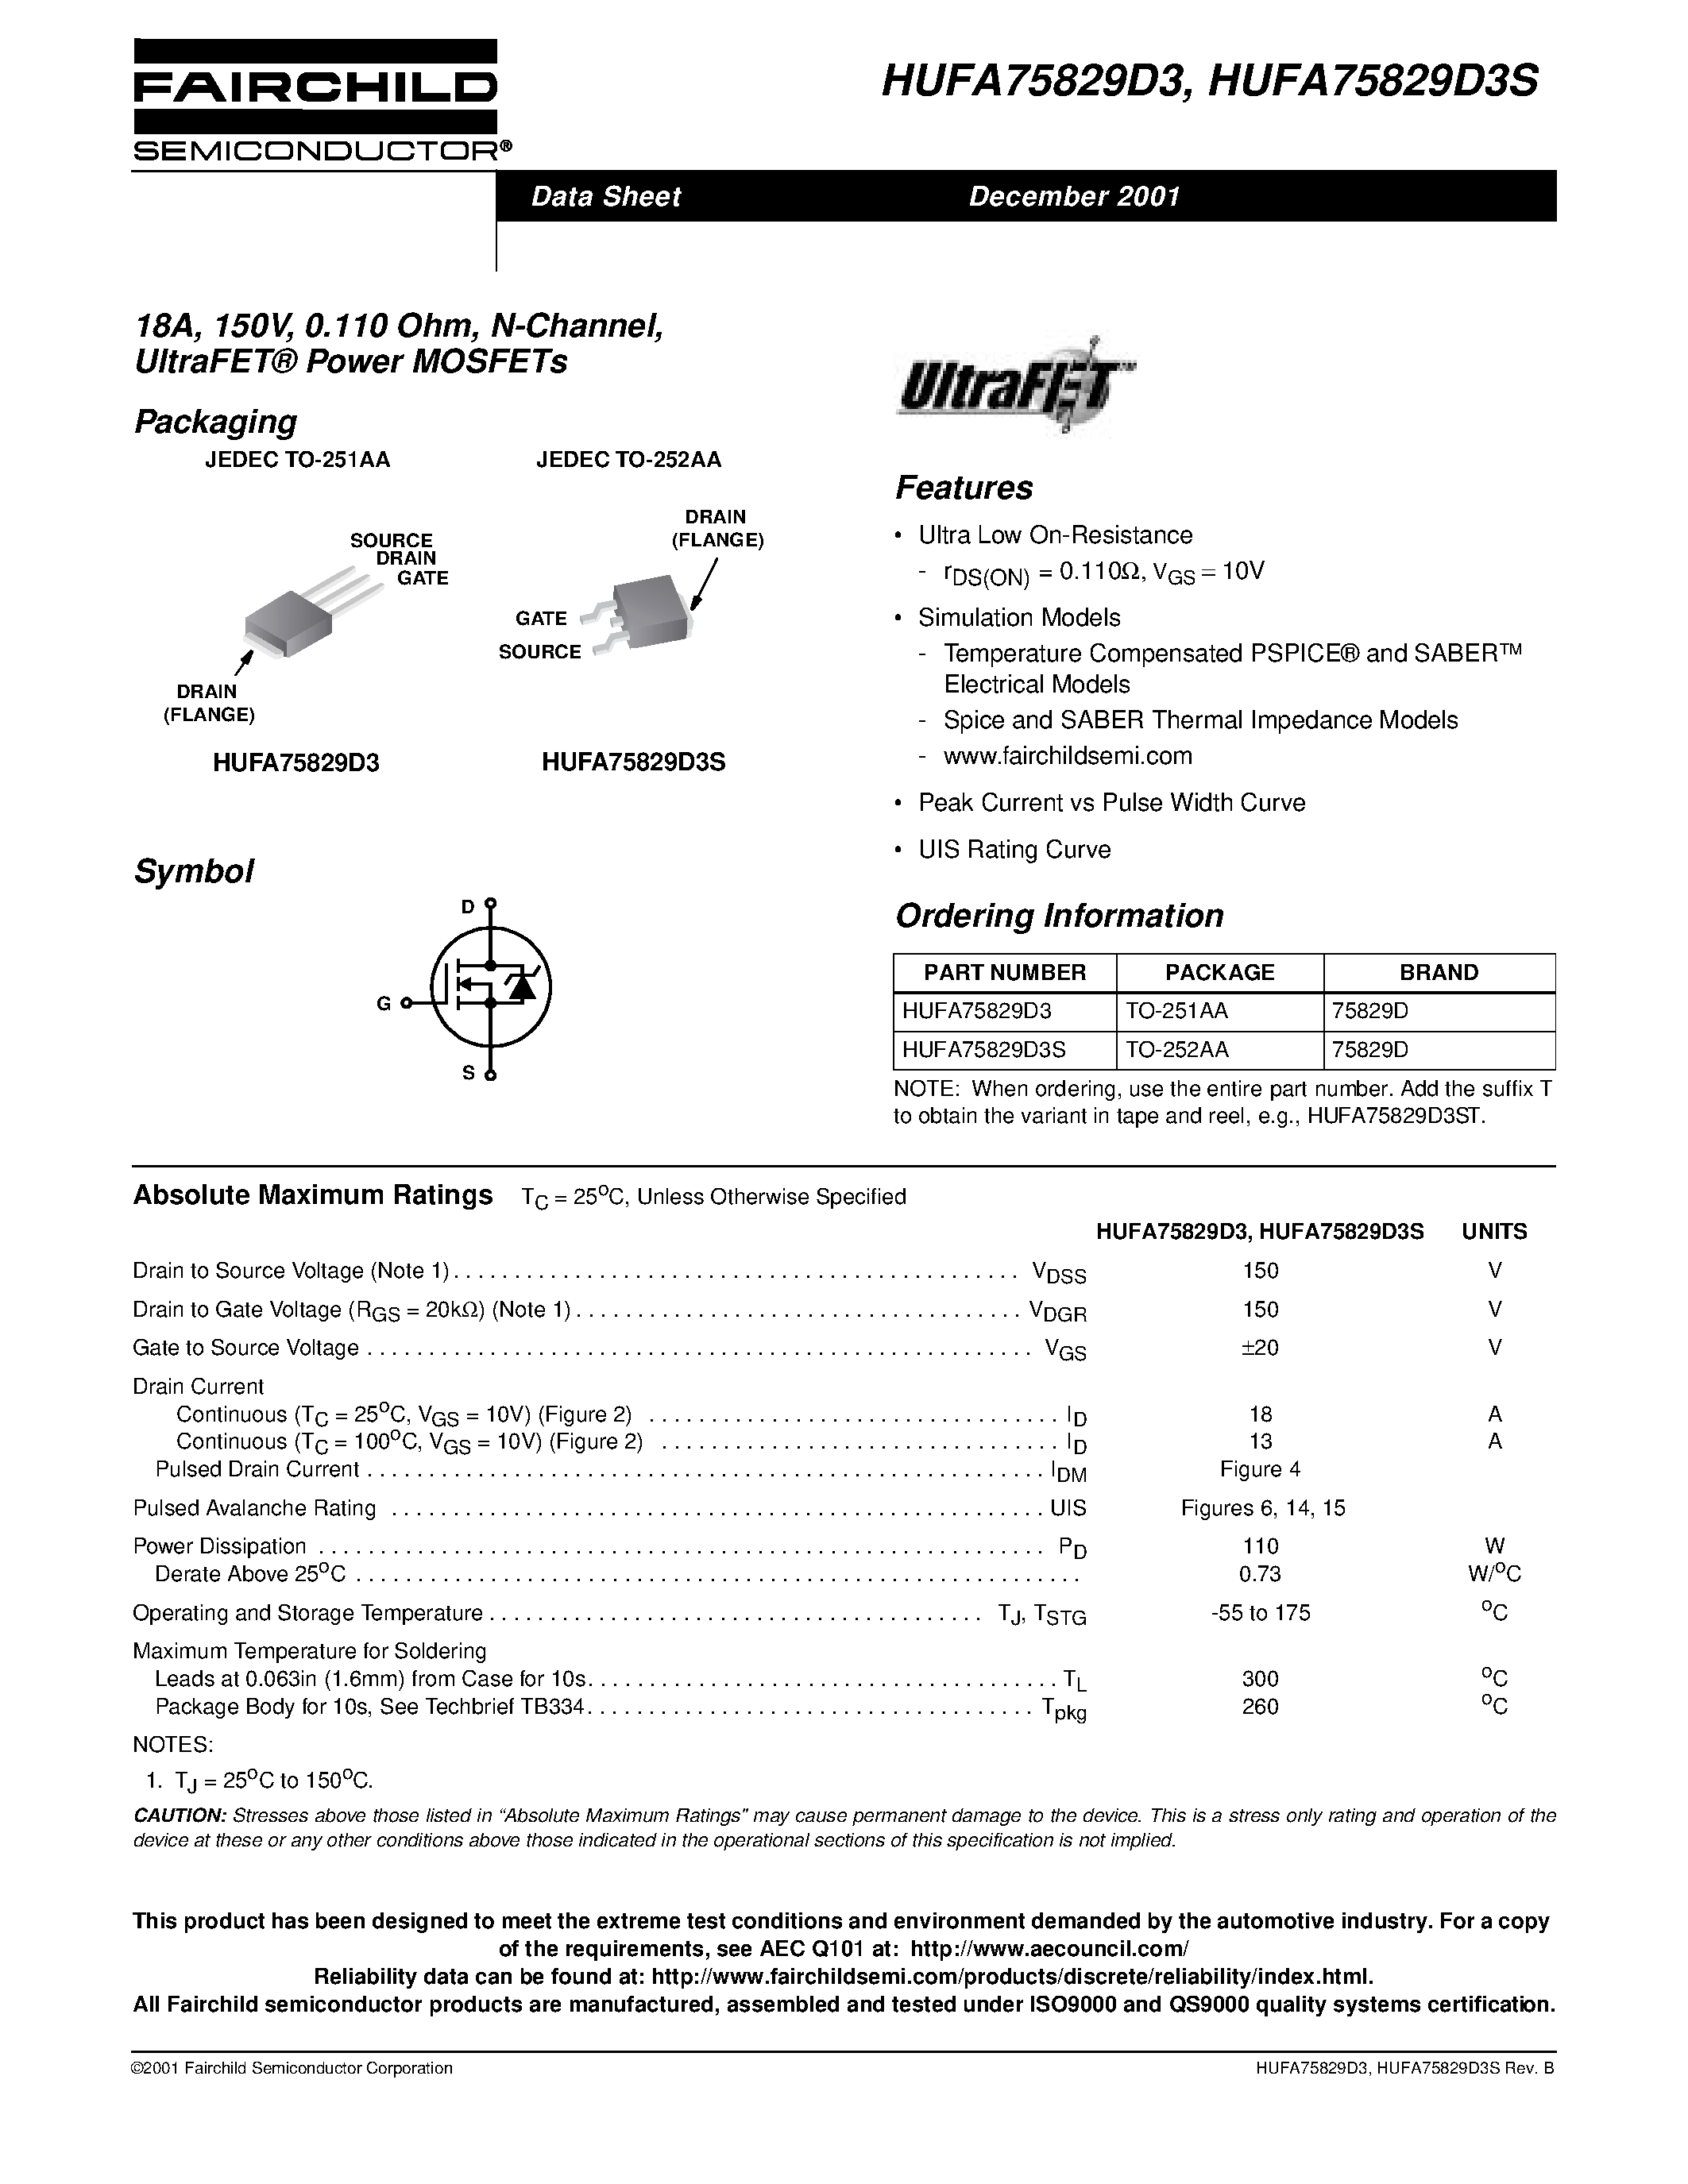 Даташит HUFA75829D3 - 18A/ 150V/ 0.110 Ohm/ N-Channel/ UltraFET Power MOSFETs страница 1